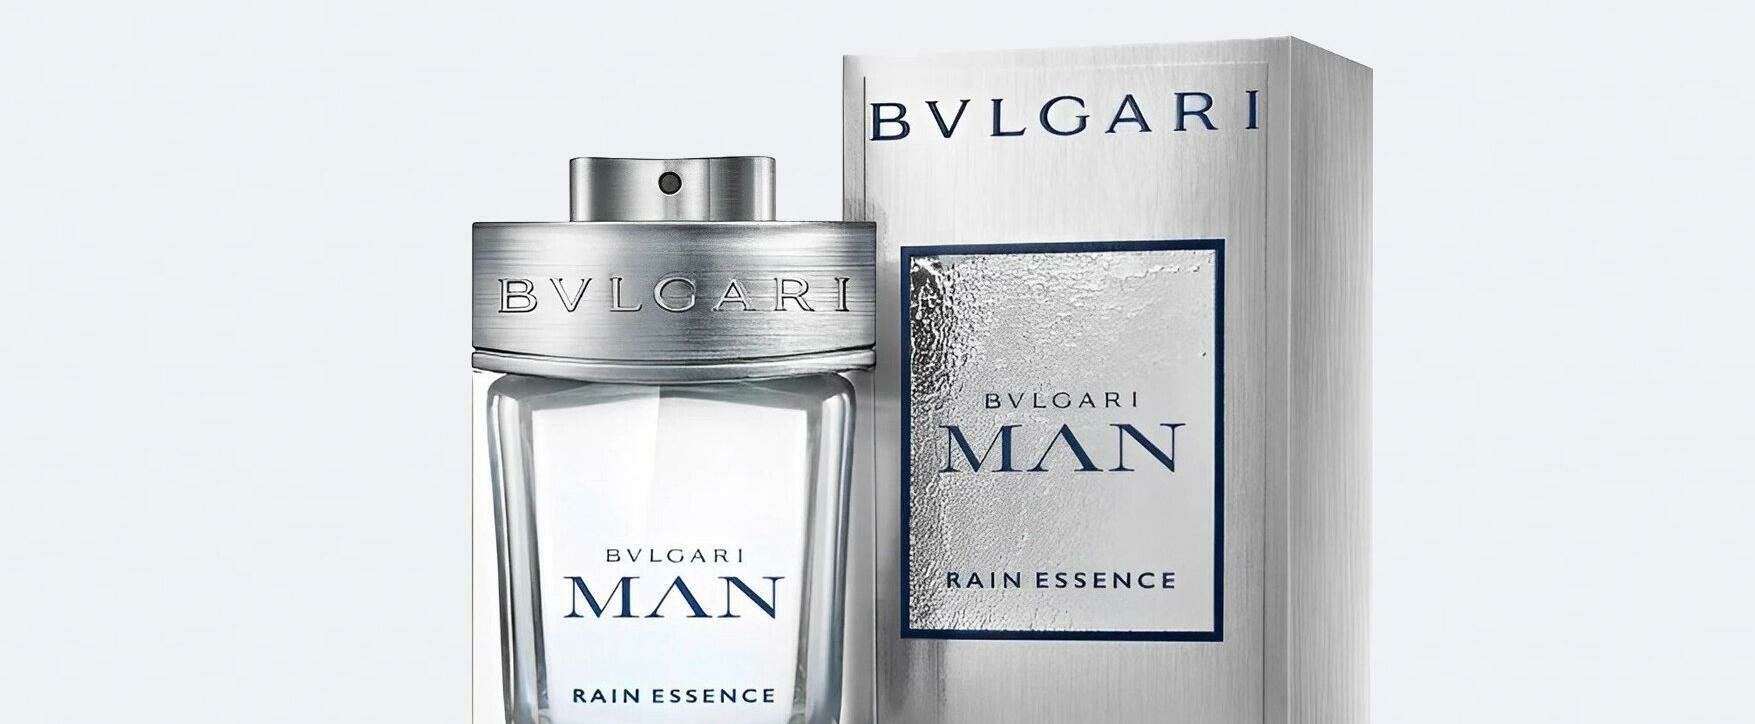 The Power of Rain: Bvlgari Presents New Fragrance "Bvlgari Man Rain Essence"